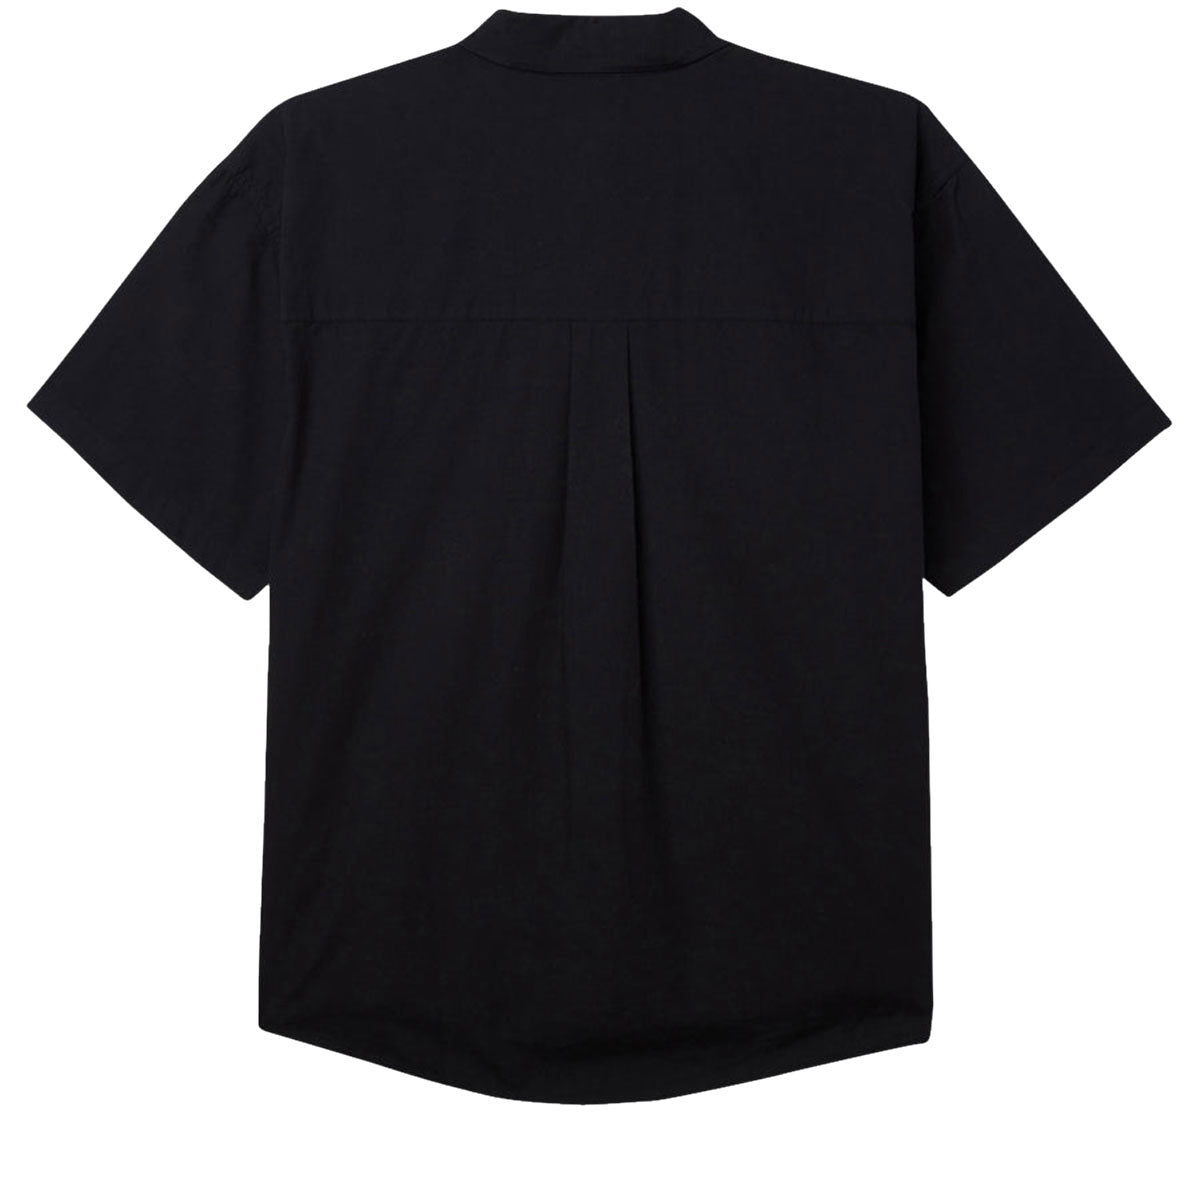 Obey Pigment Lowercase Woven Shirt - Pigment Vintage Black image 2